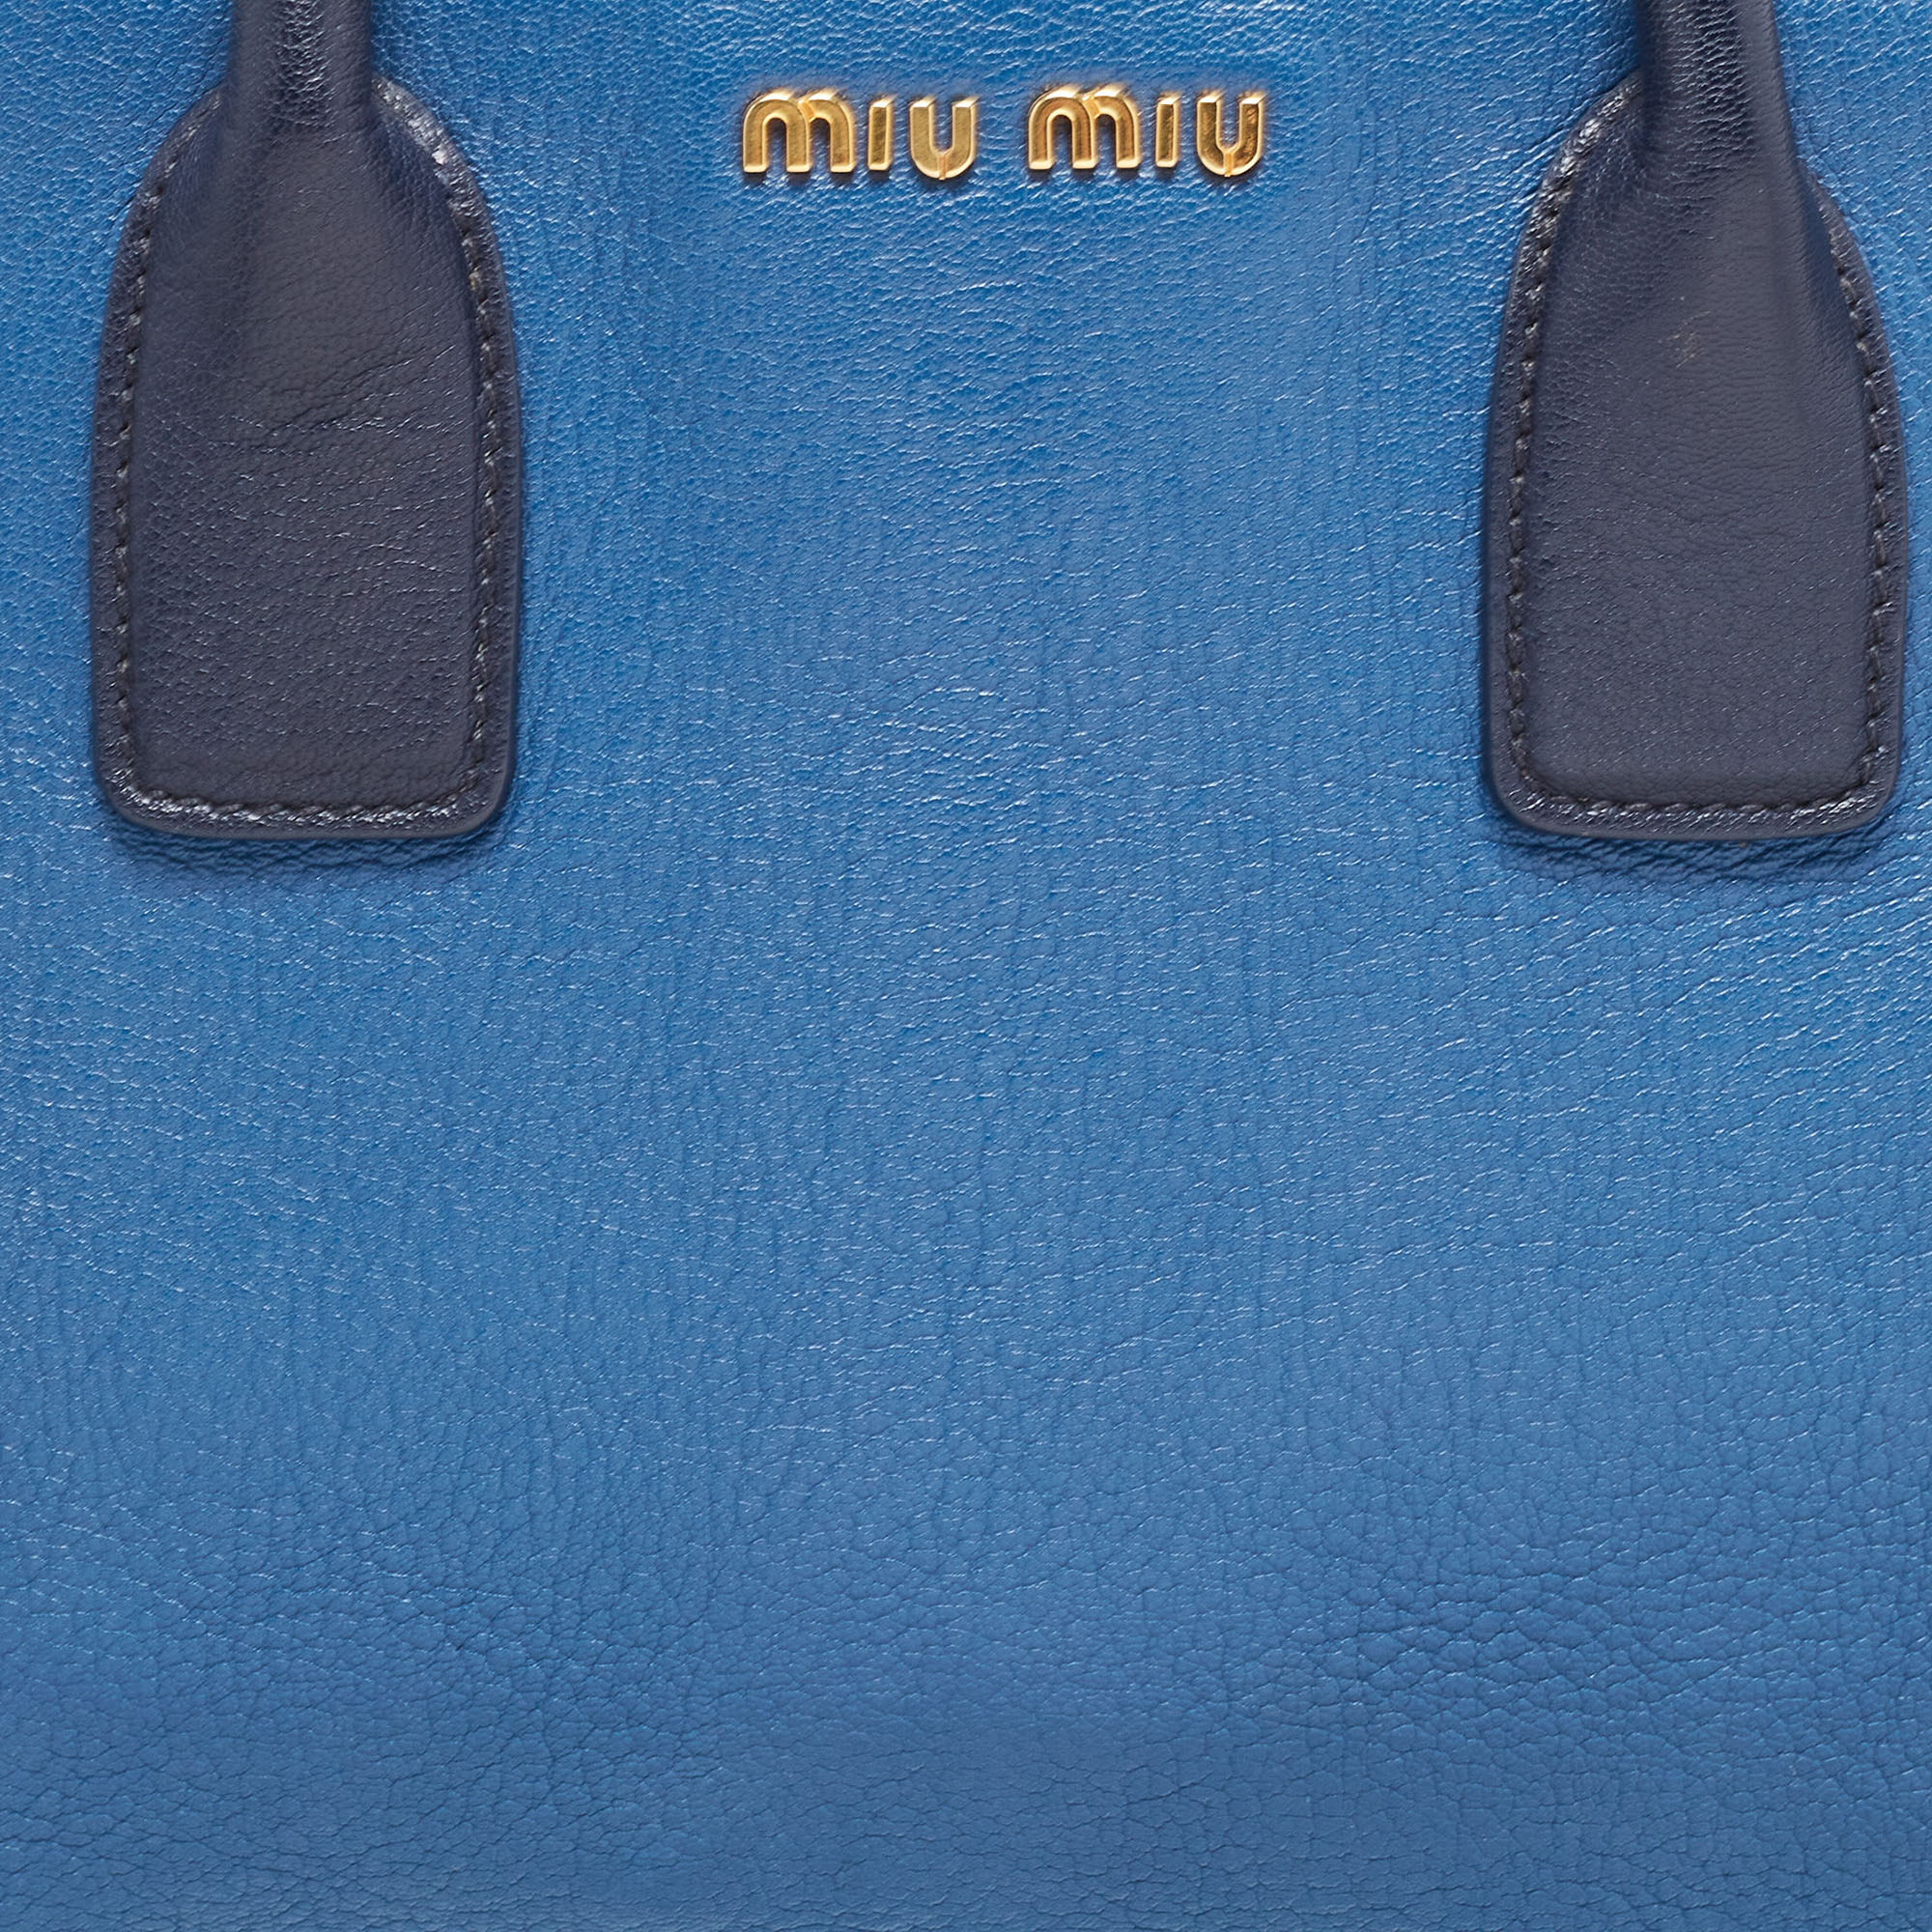 Miu Miu Two Tone Blue Leather Middle Zip Tote